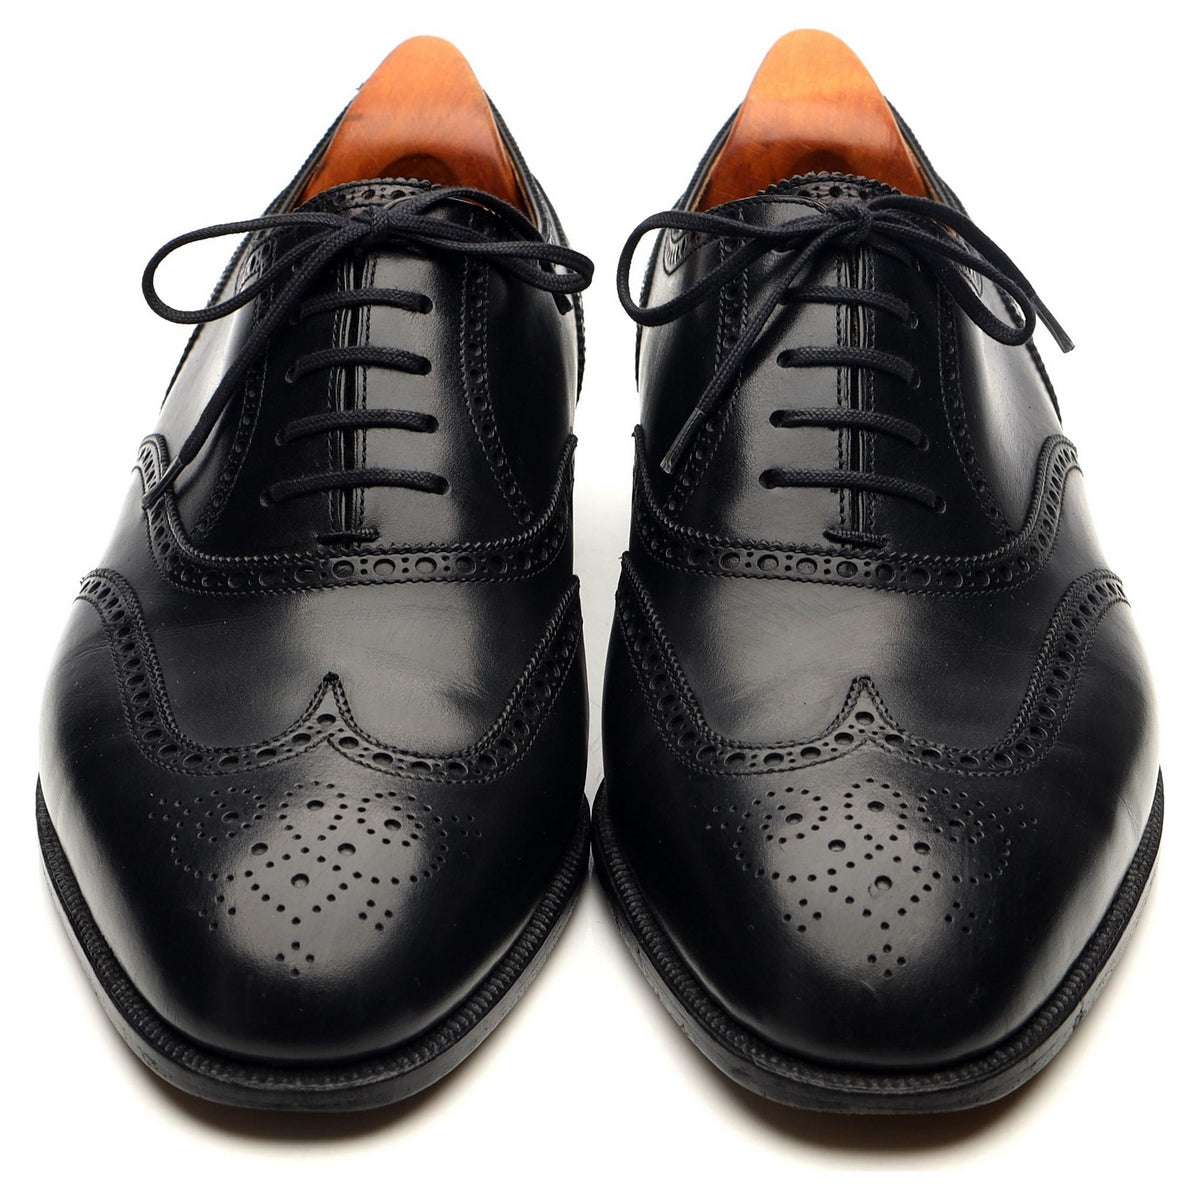 Bespoke Black Leather Oxford Brogues UK 9.5 / UK 10